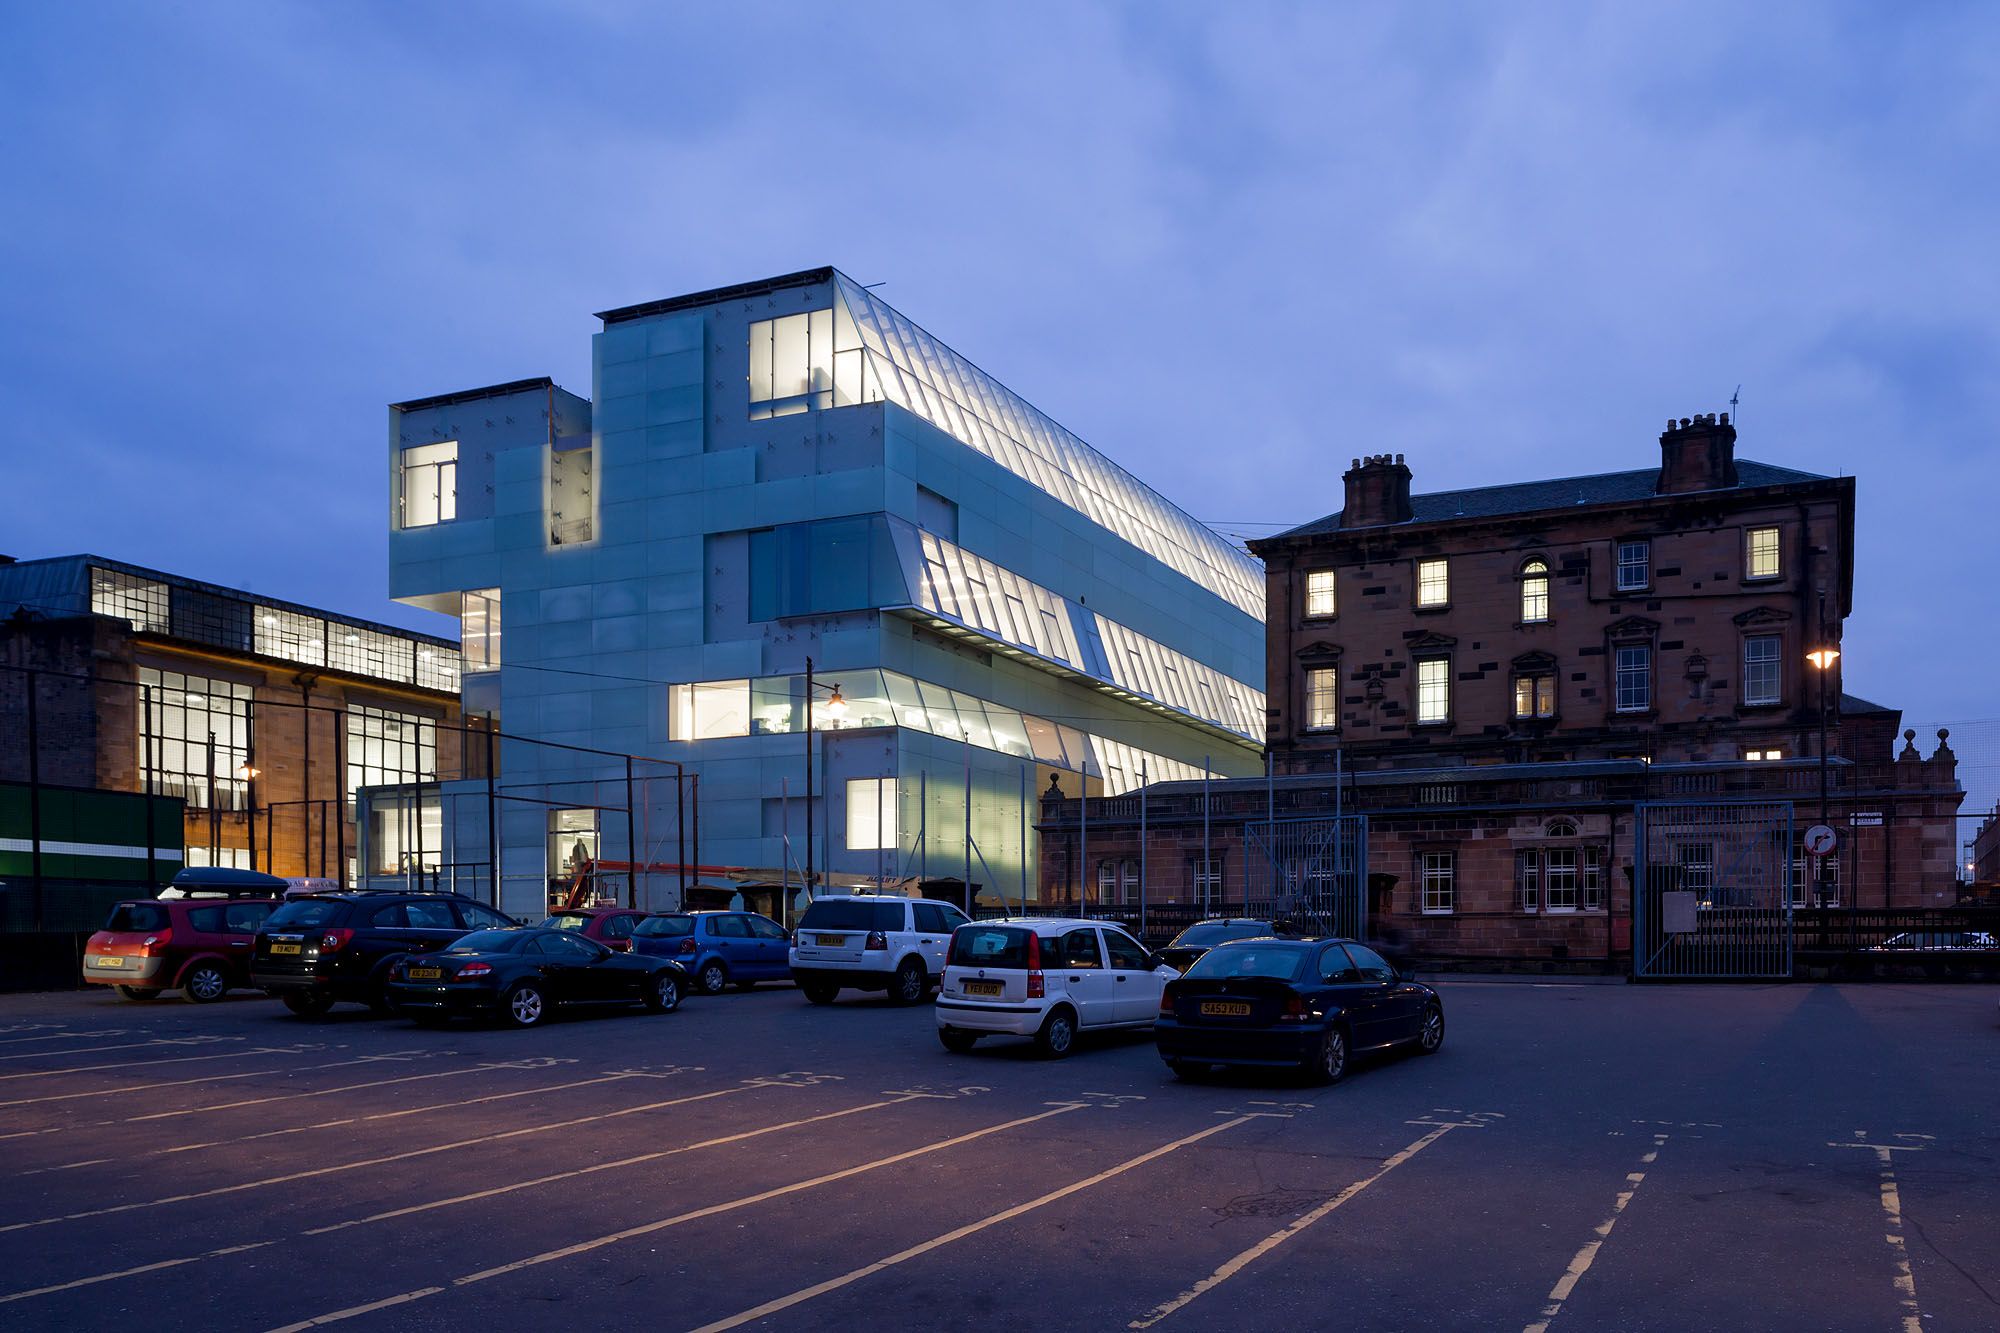 Glasgow Art School – Steven Holl